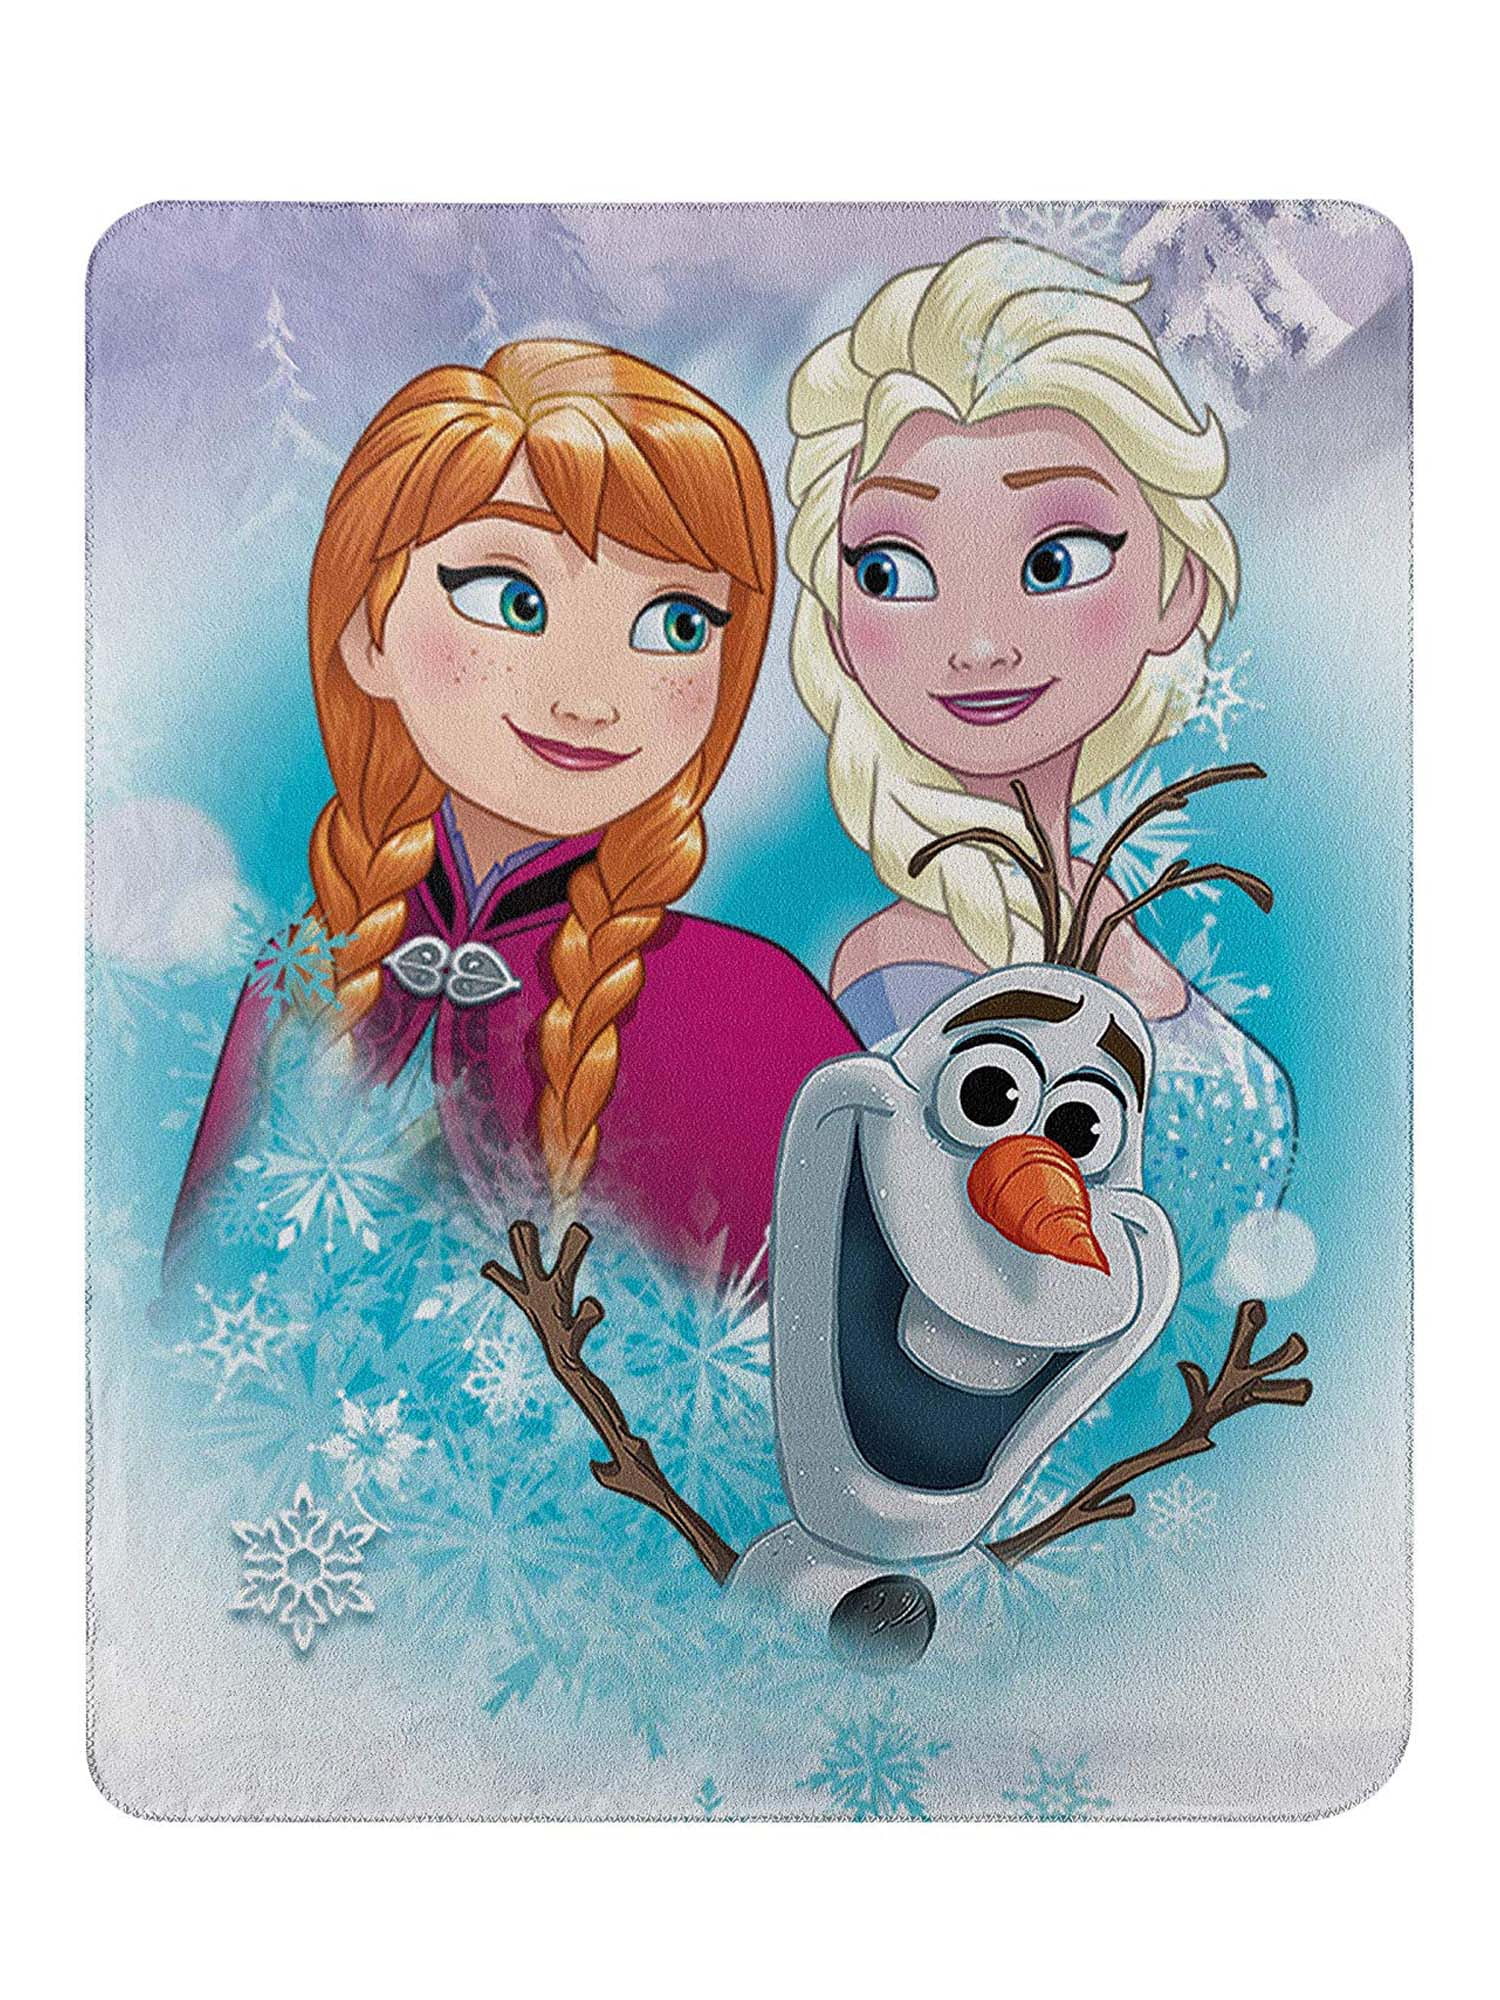 Disney FROZEN 2 Elsa Anna & More 50 x 60 Soft Cloud Touch Sherpa Throw Blanket 